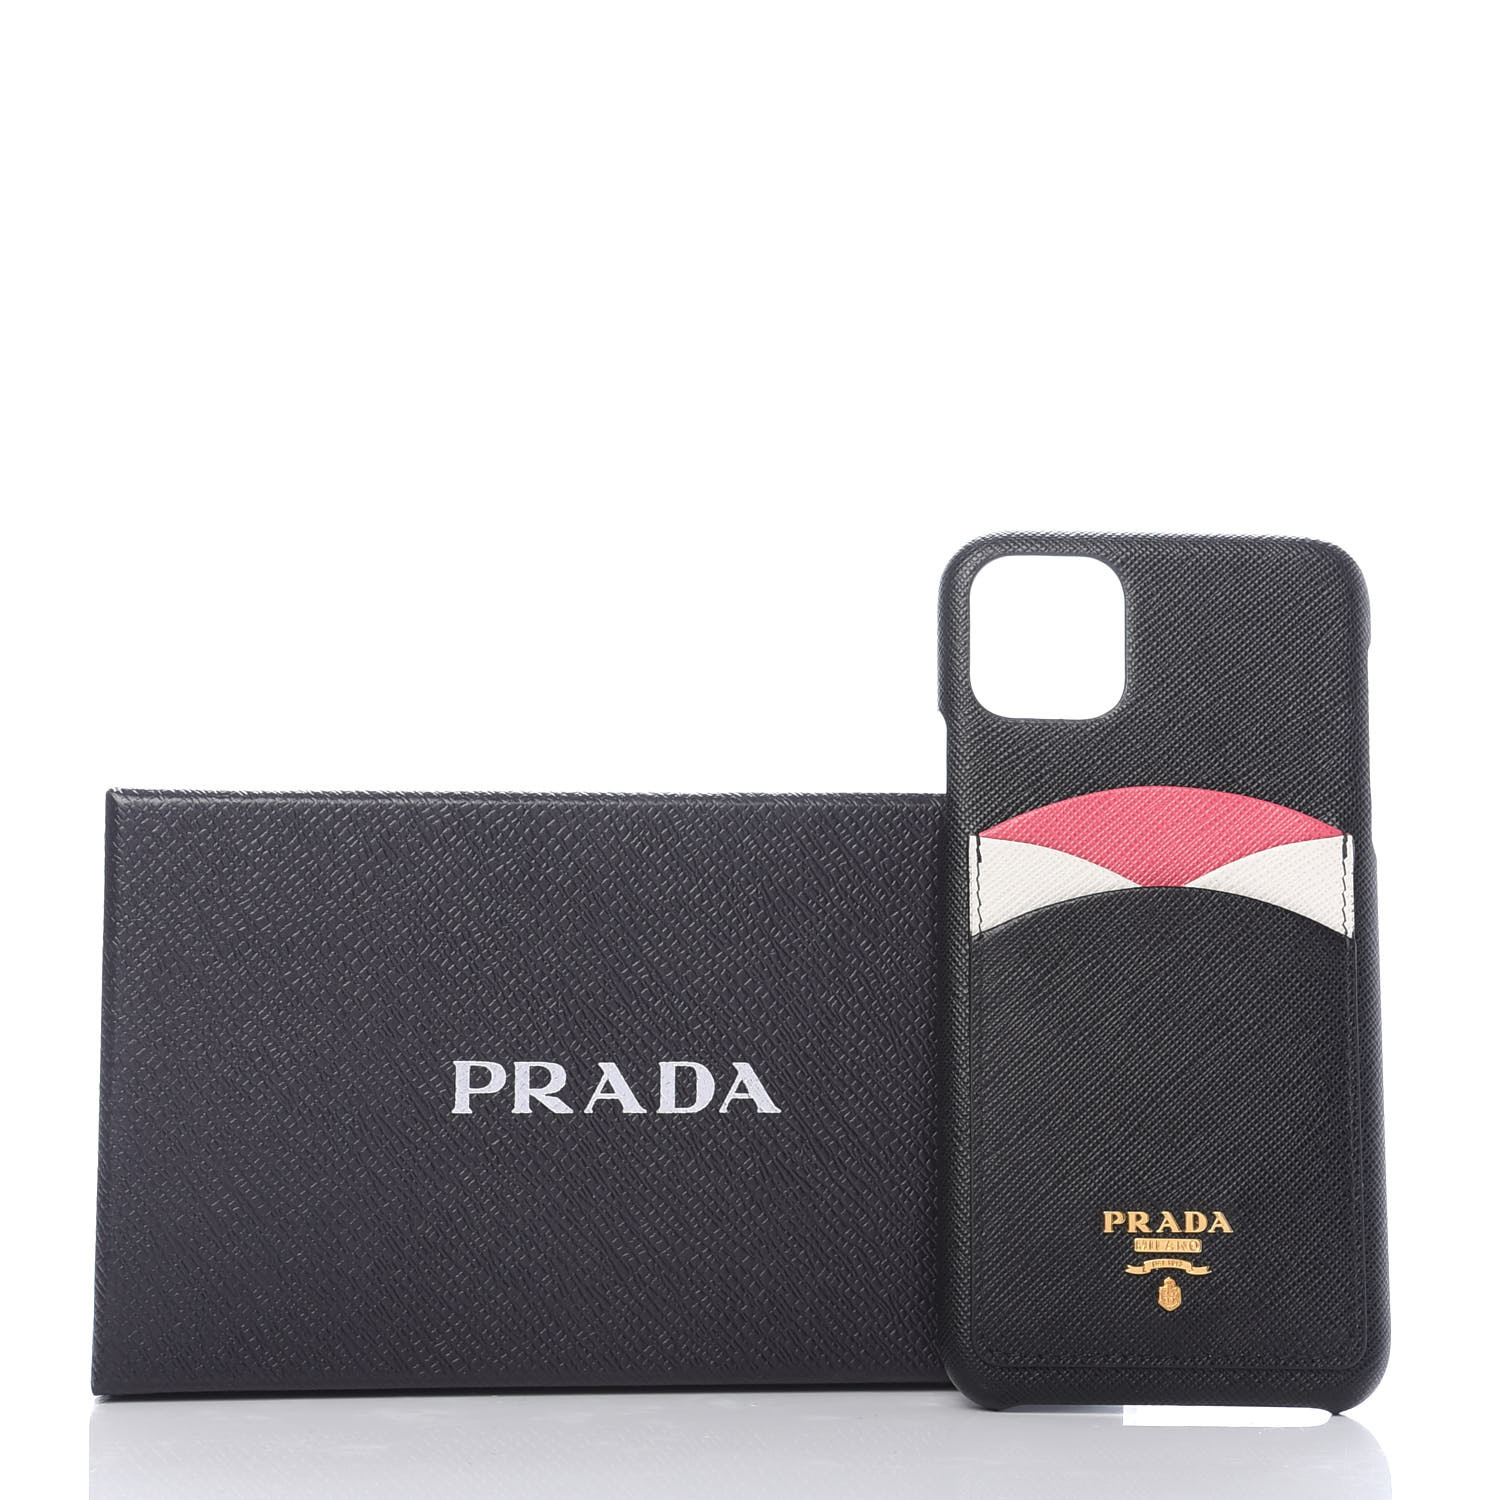 PRADA Saffiano iPhone 11 Pro Max Case Black Hibiscus 733748 | FASHIONPHILE